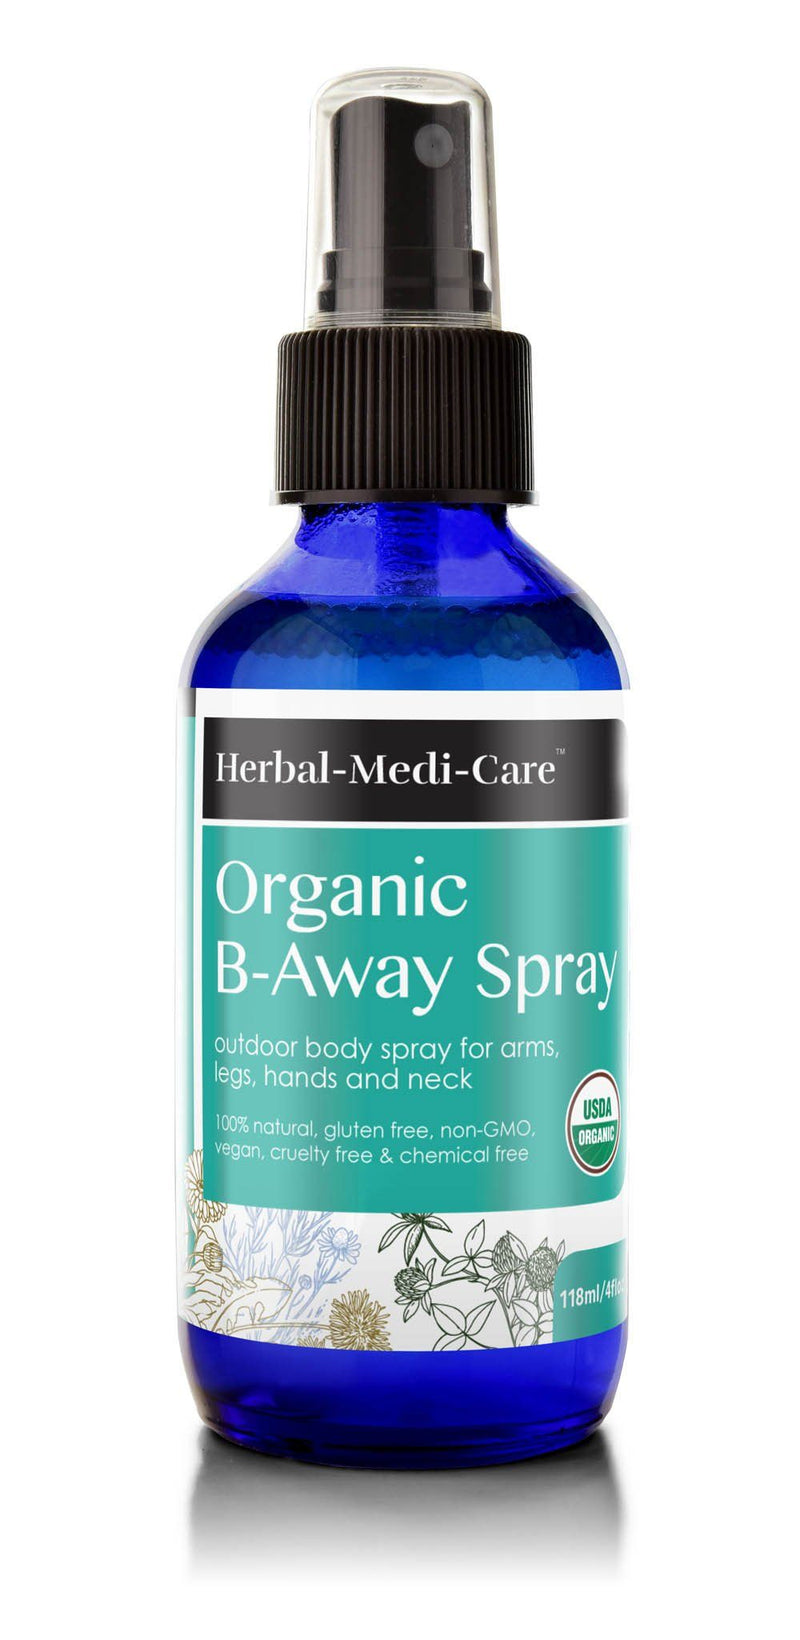 Herbal-Medi-Care Organic B-Away (Bug Away) Spray; 4floz - Herbal-Medi-Care Organic B-Away (Bug Away) Spray; 4floz - Herbal-Medi-Care Organic B-Away (Bug Away) Spray; 4floz